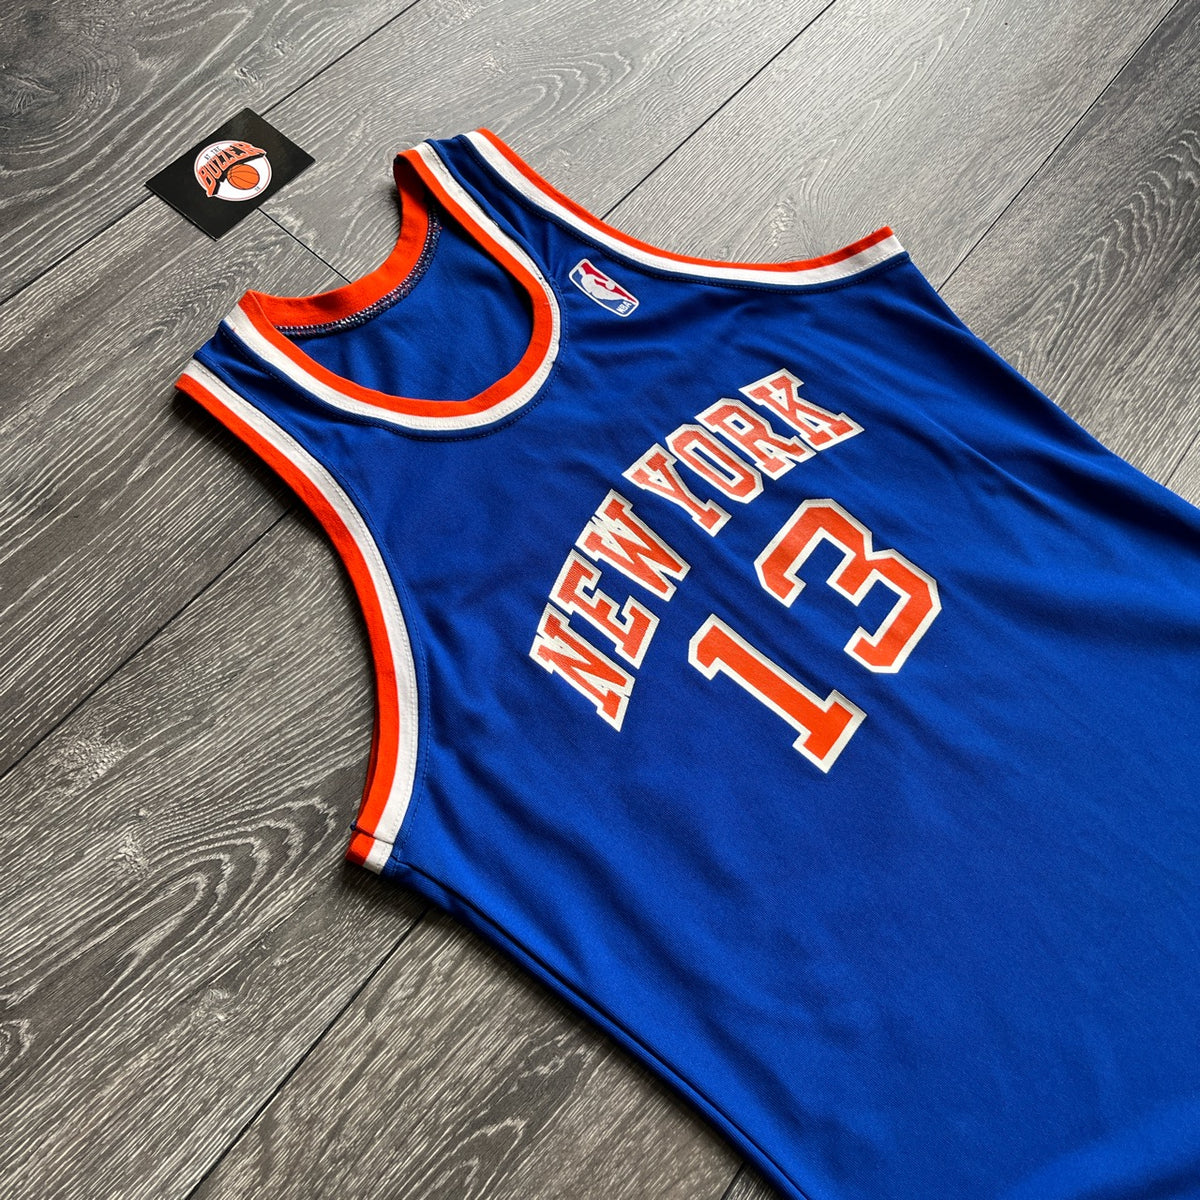 New York Knicks Mark Jackson jersey - McGregor Sand Knit (Large) – At the  buzzer UK